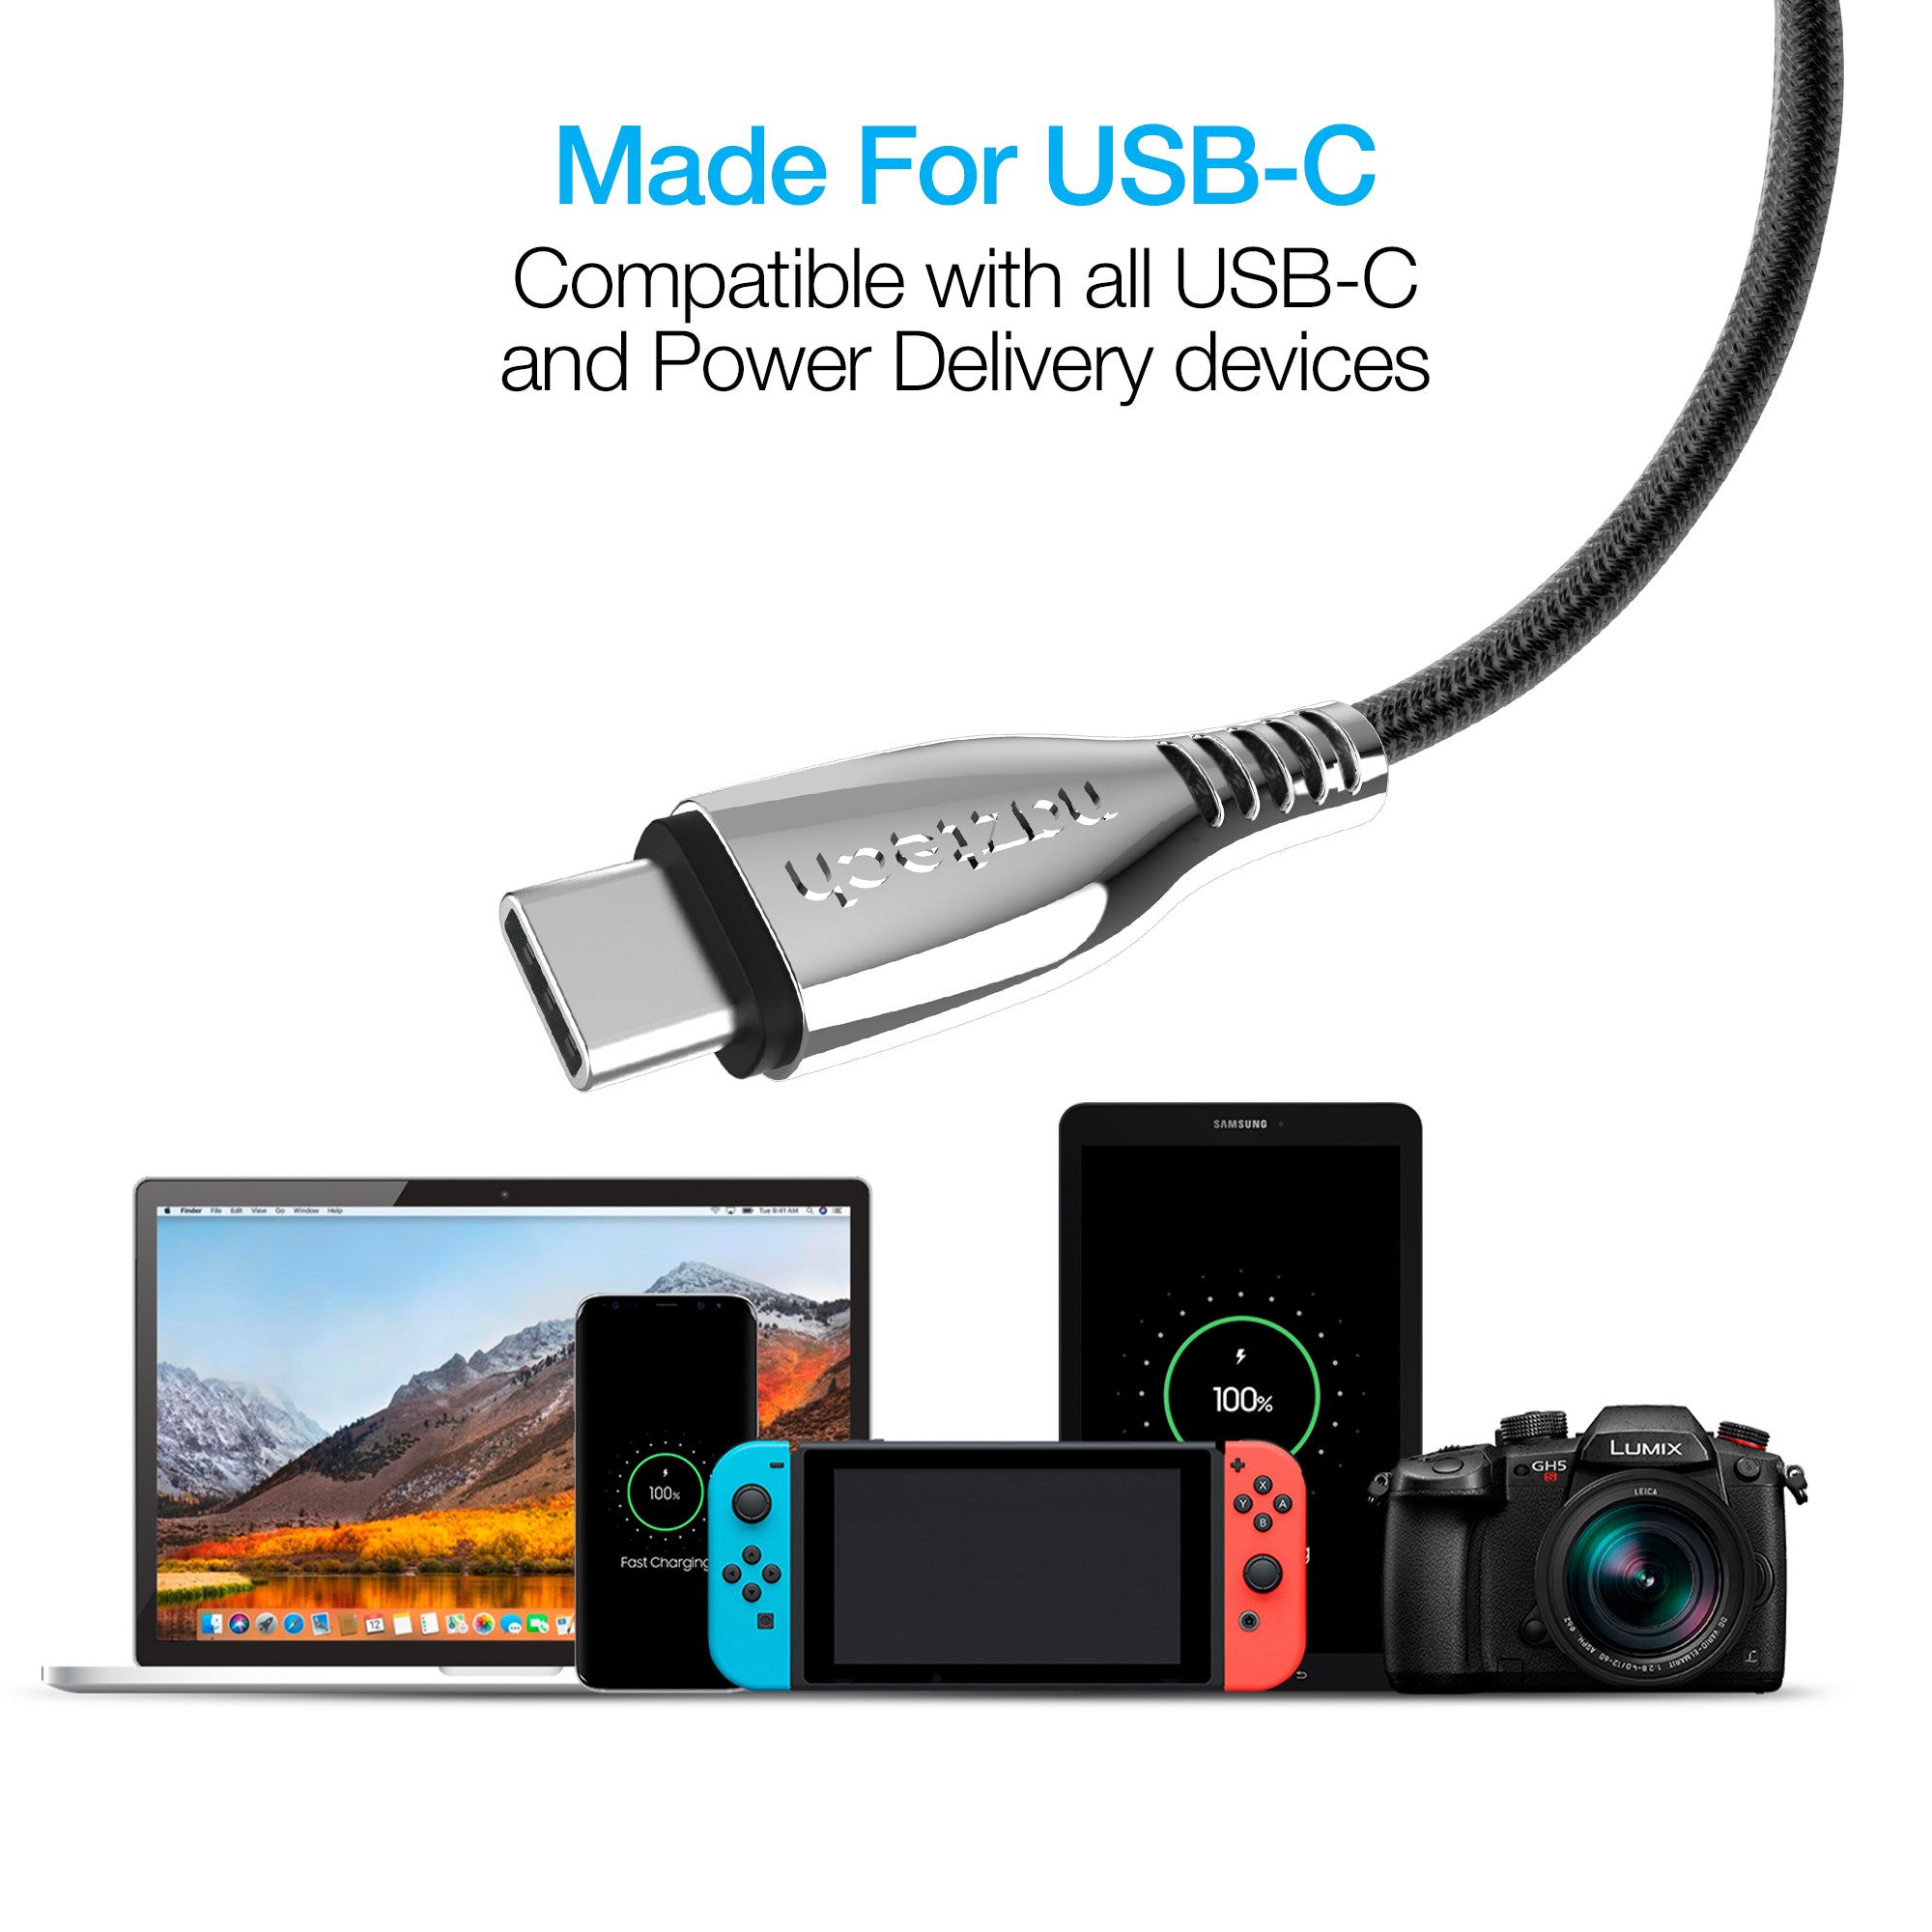 Samsung USB-C Cable (USB-C to USB-A) 